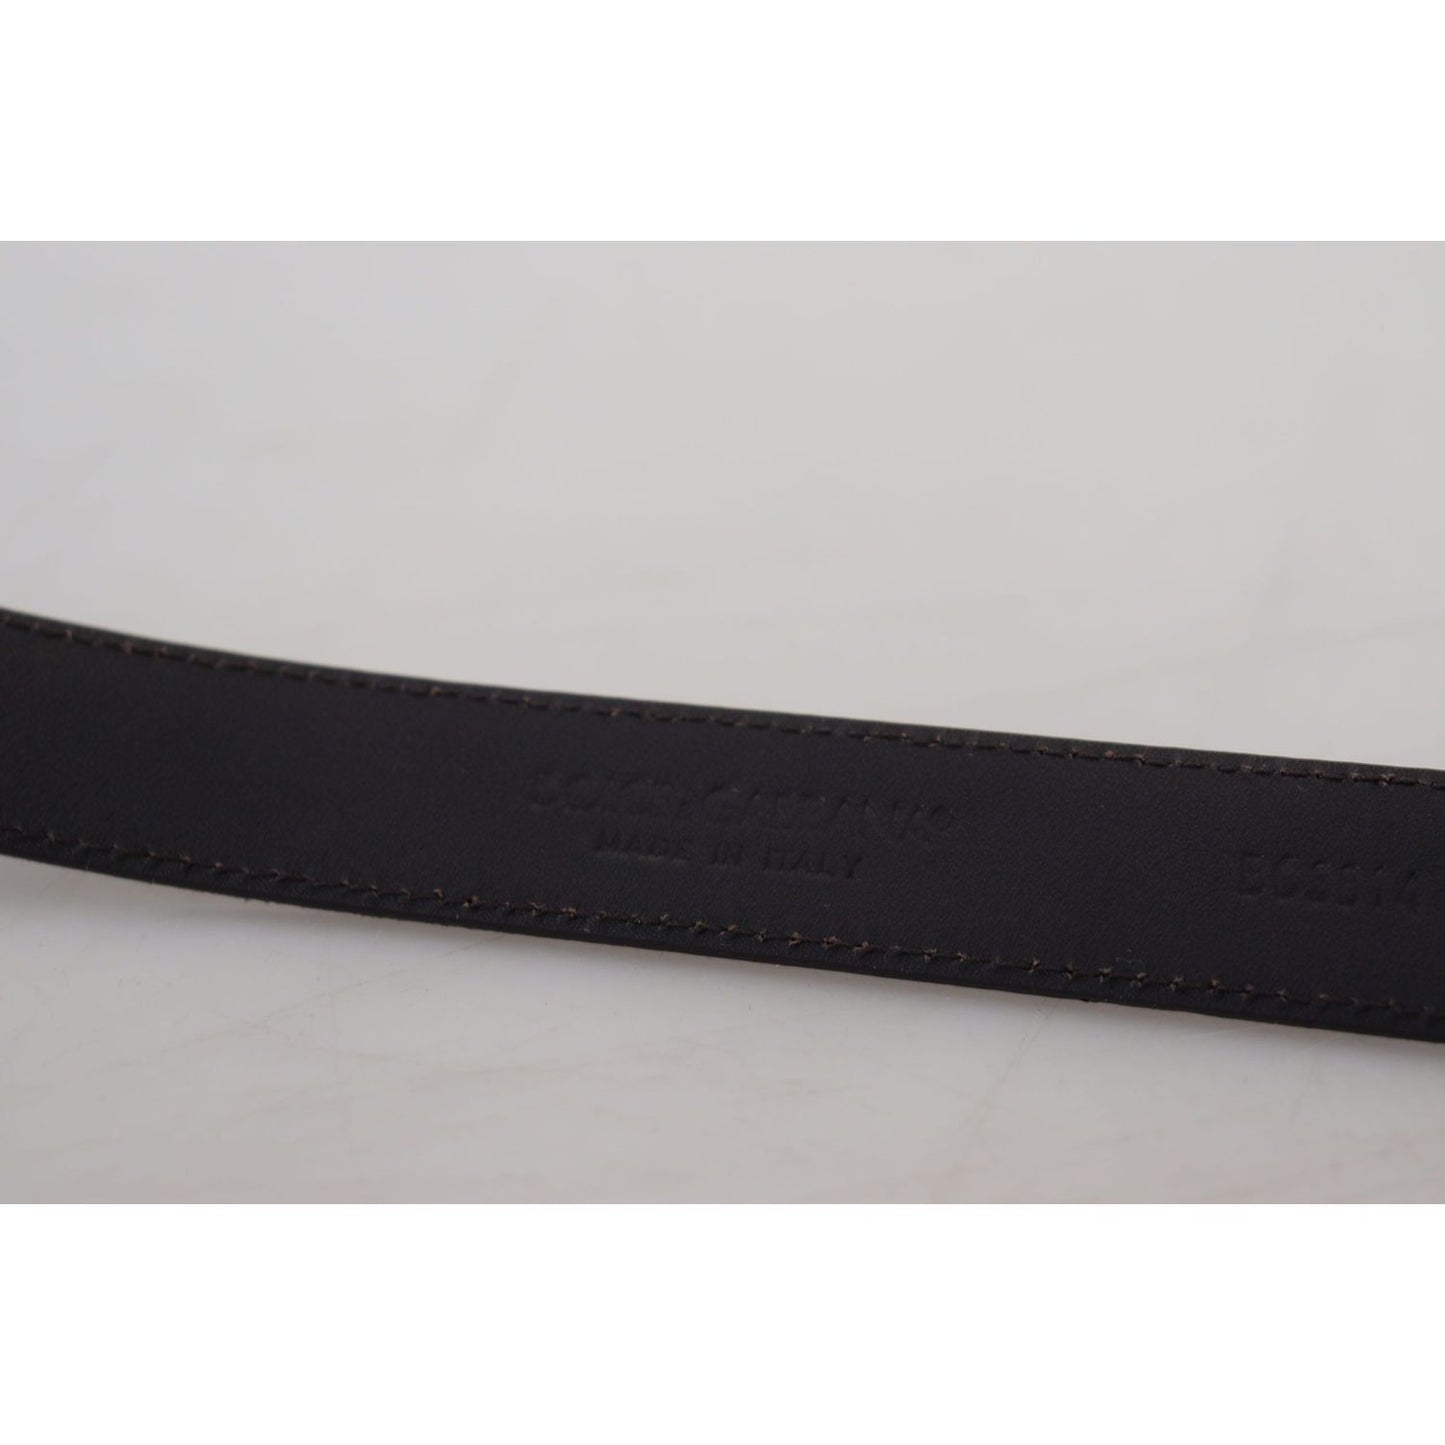 Elegant Italian Leather Belt with Metal Buckle